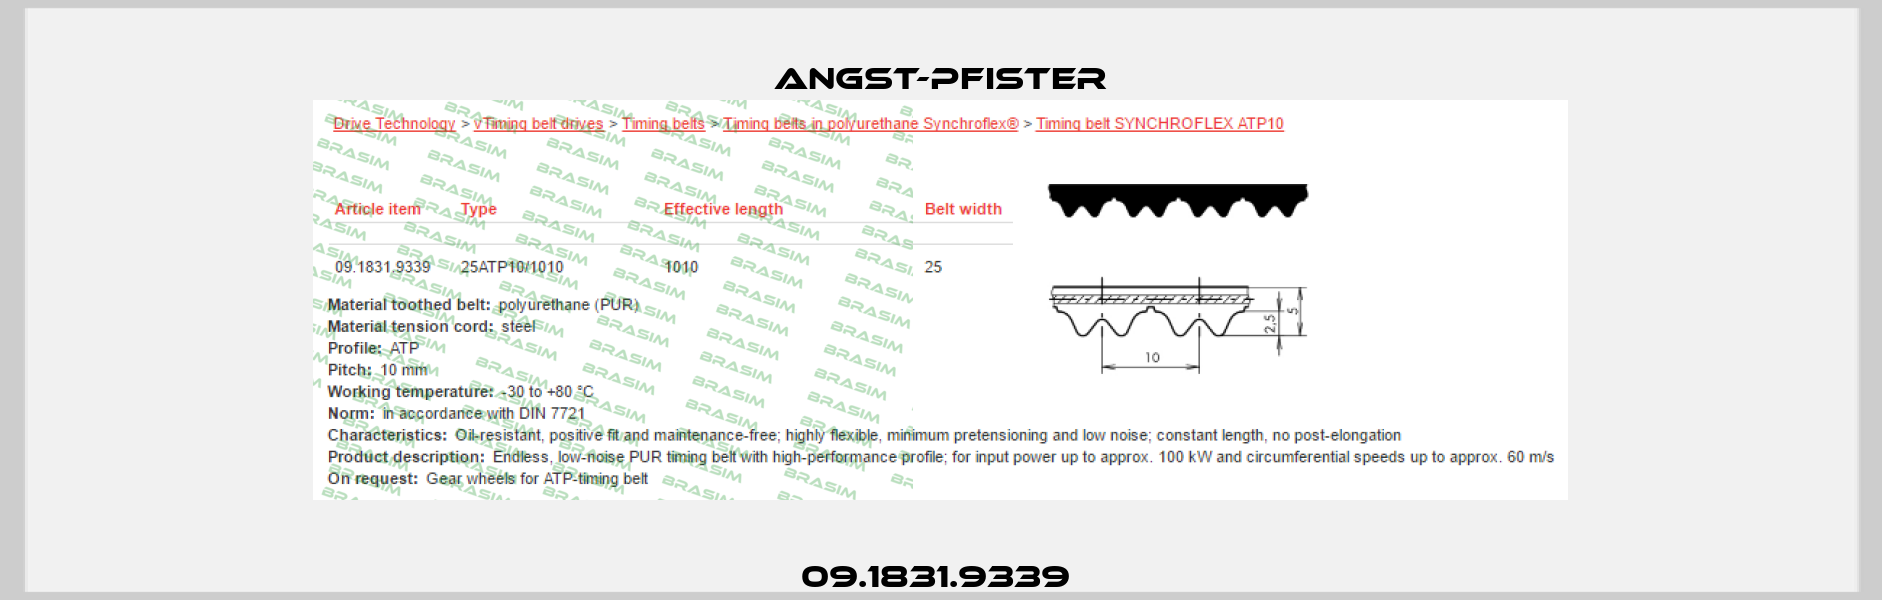 09.1831.9339  Angst-Pfister